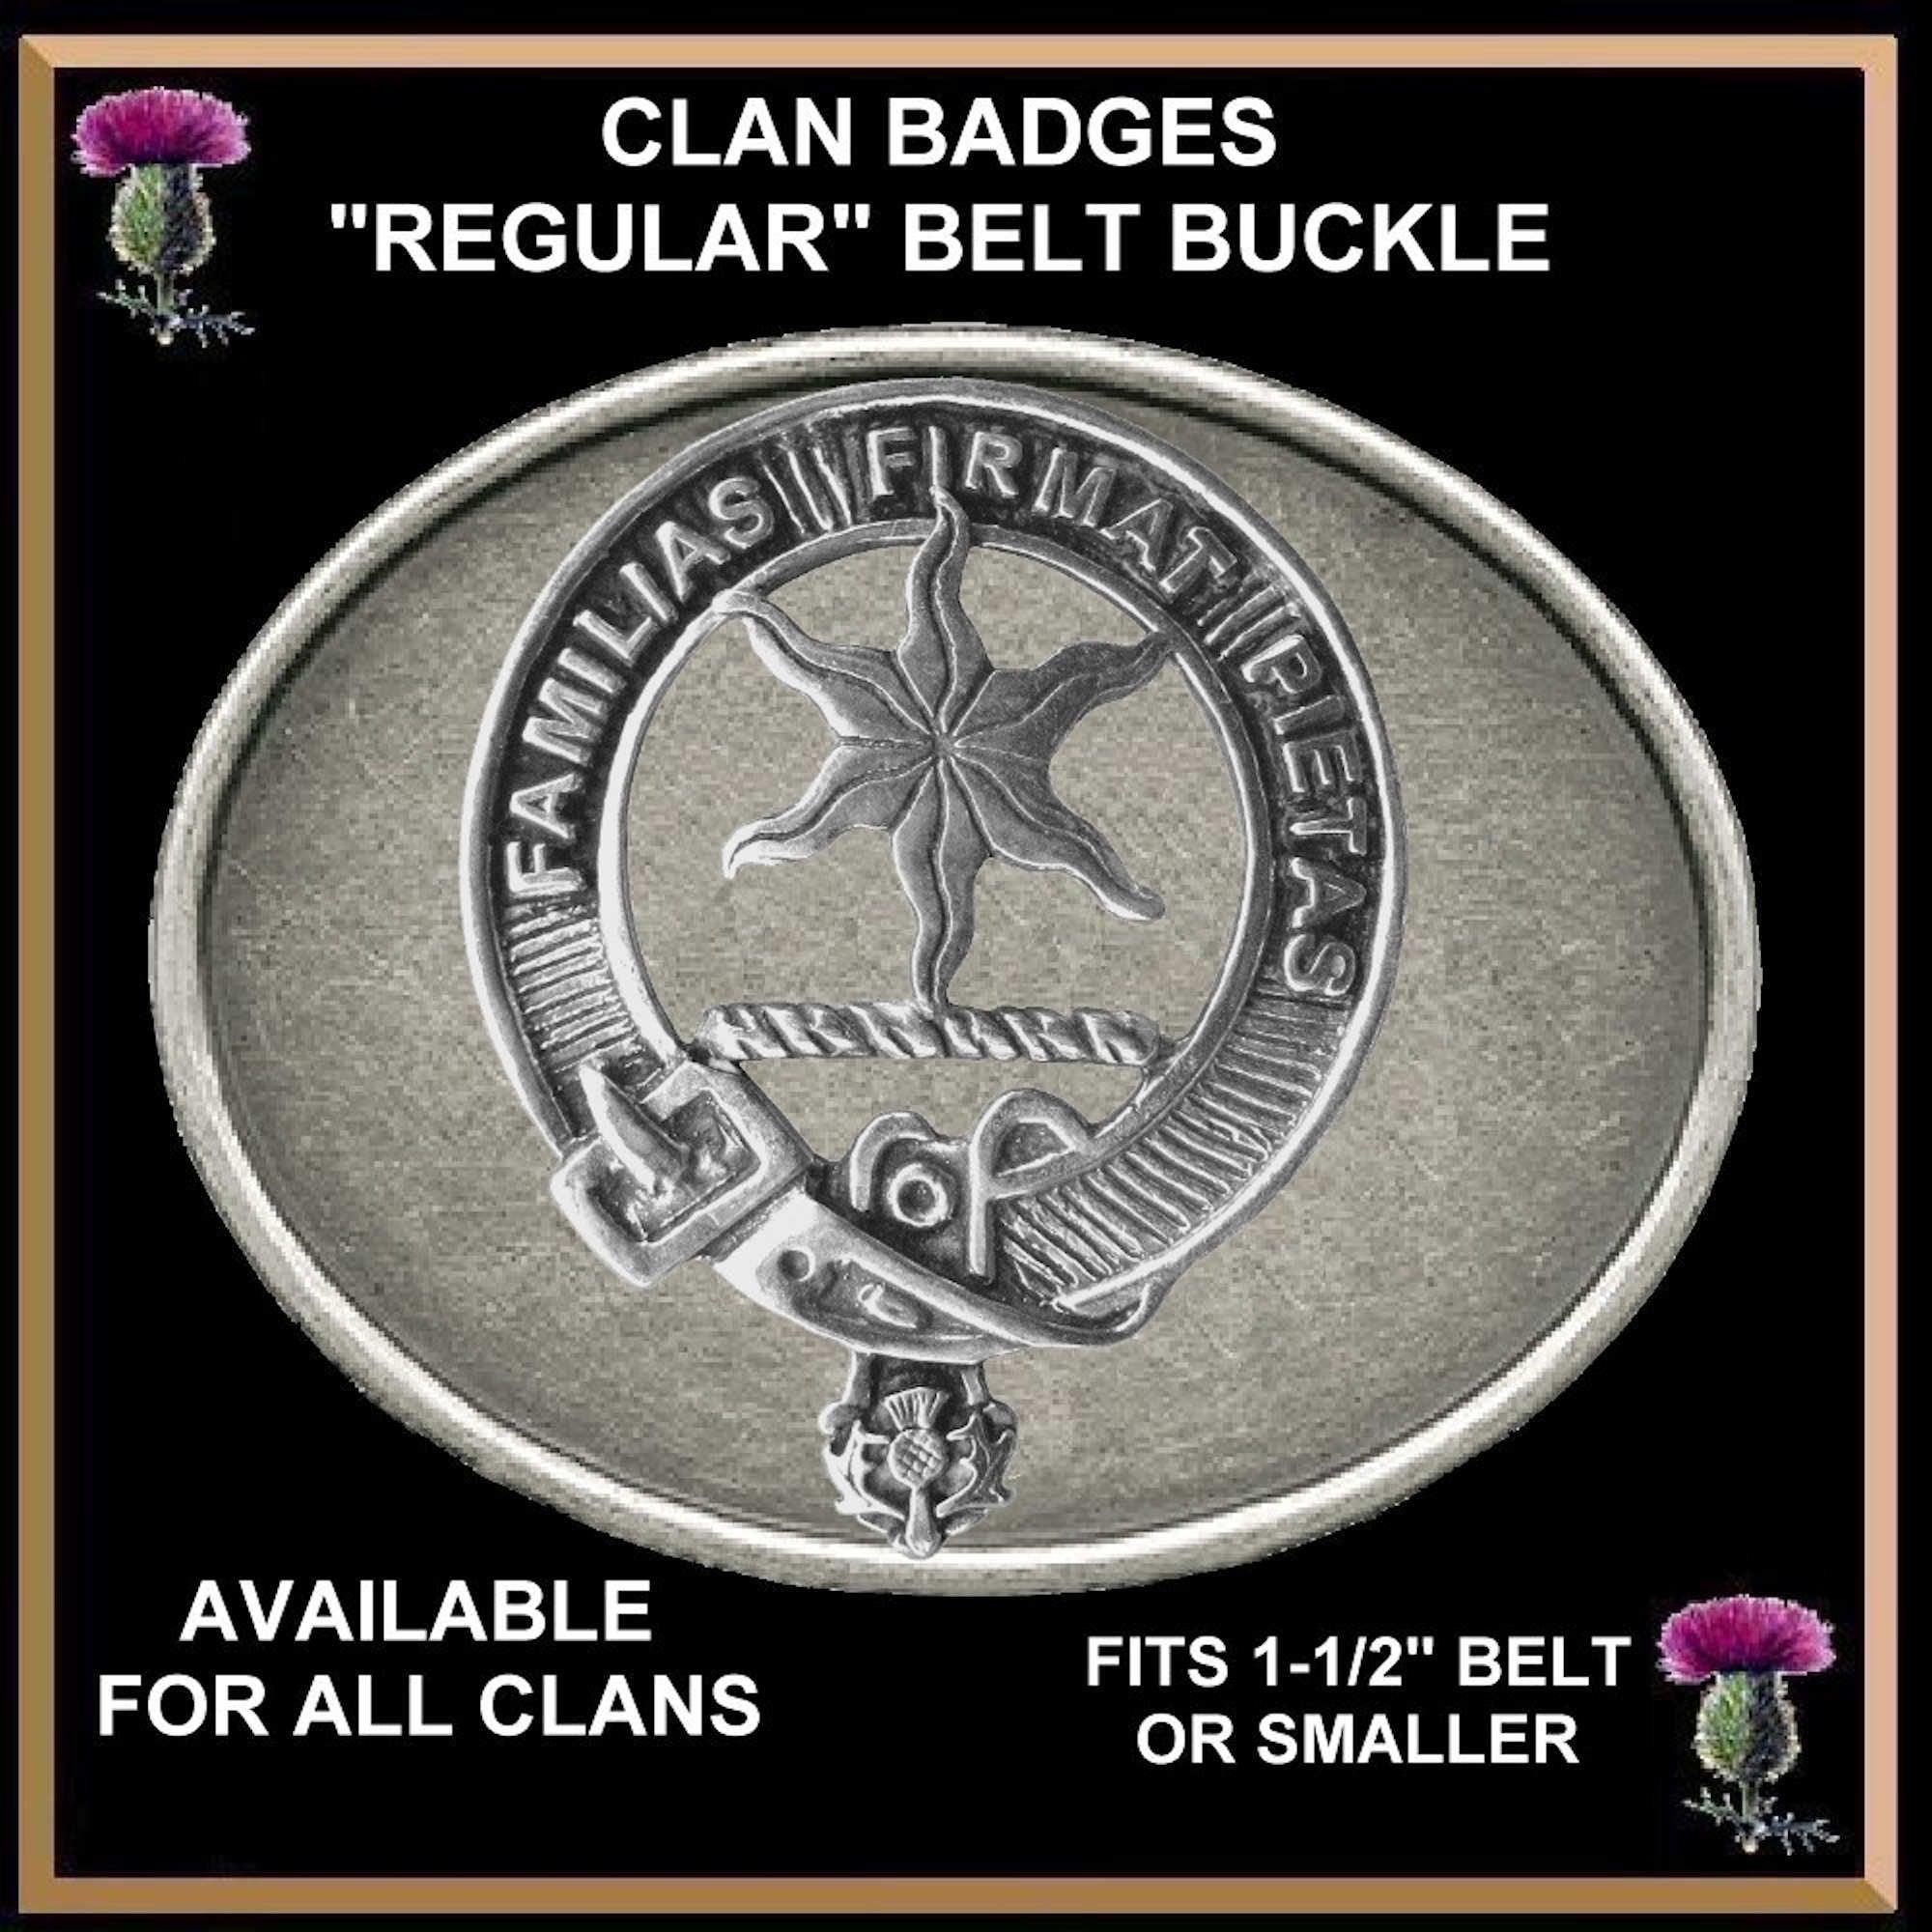 Wardlaw Clan Crest Regular Buckle